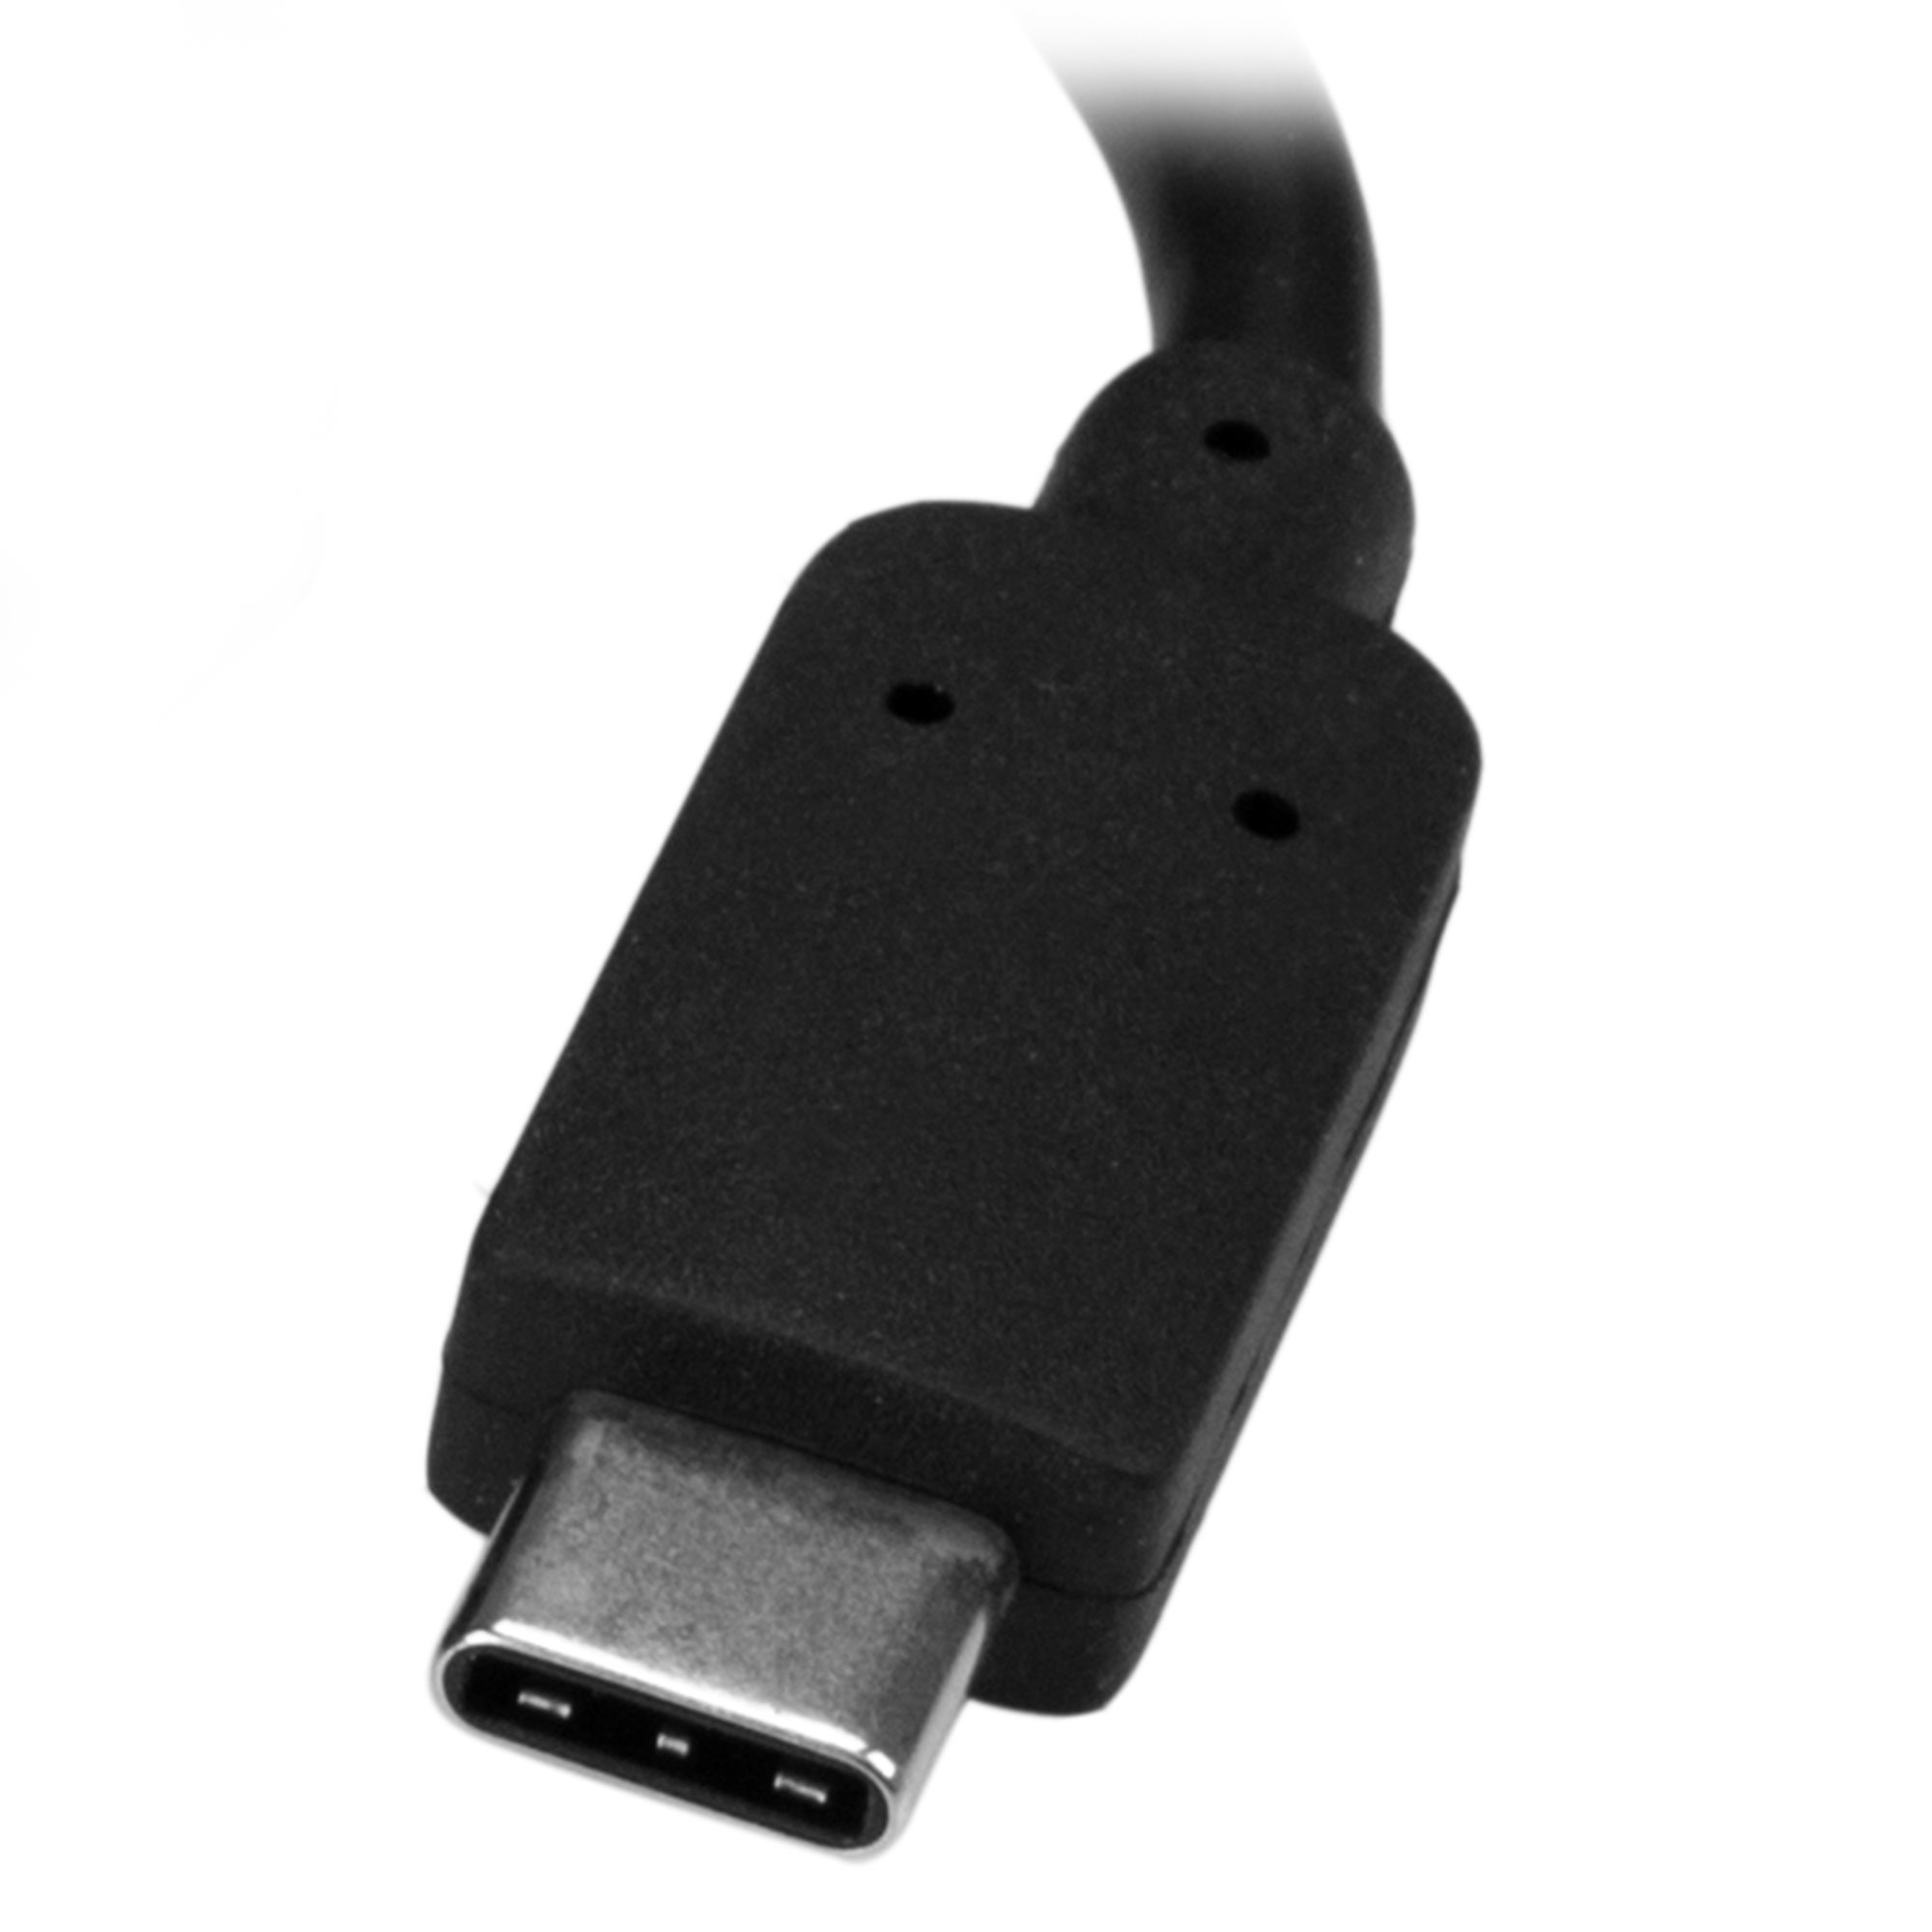 Adaptateur USB 3.1 type C mâle - Ethernet Gigabit RJ45 et 3 USB 3.0